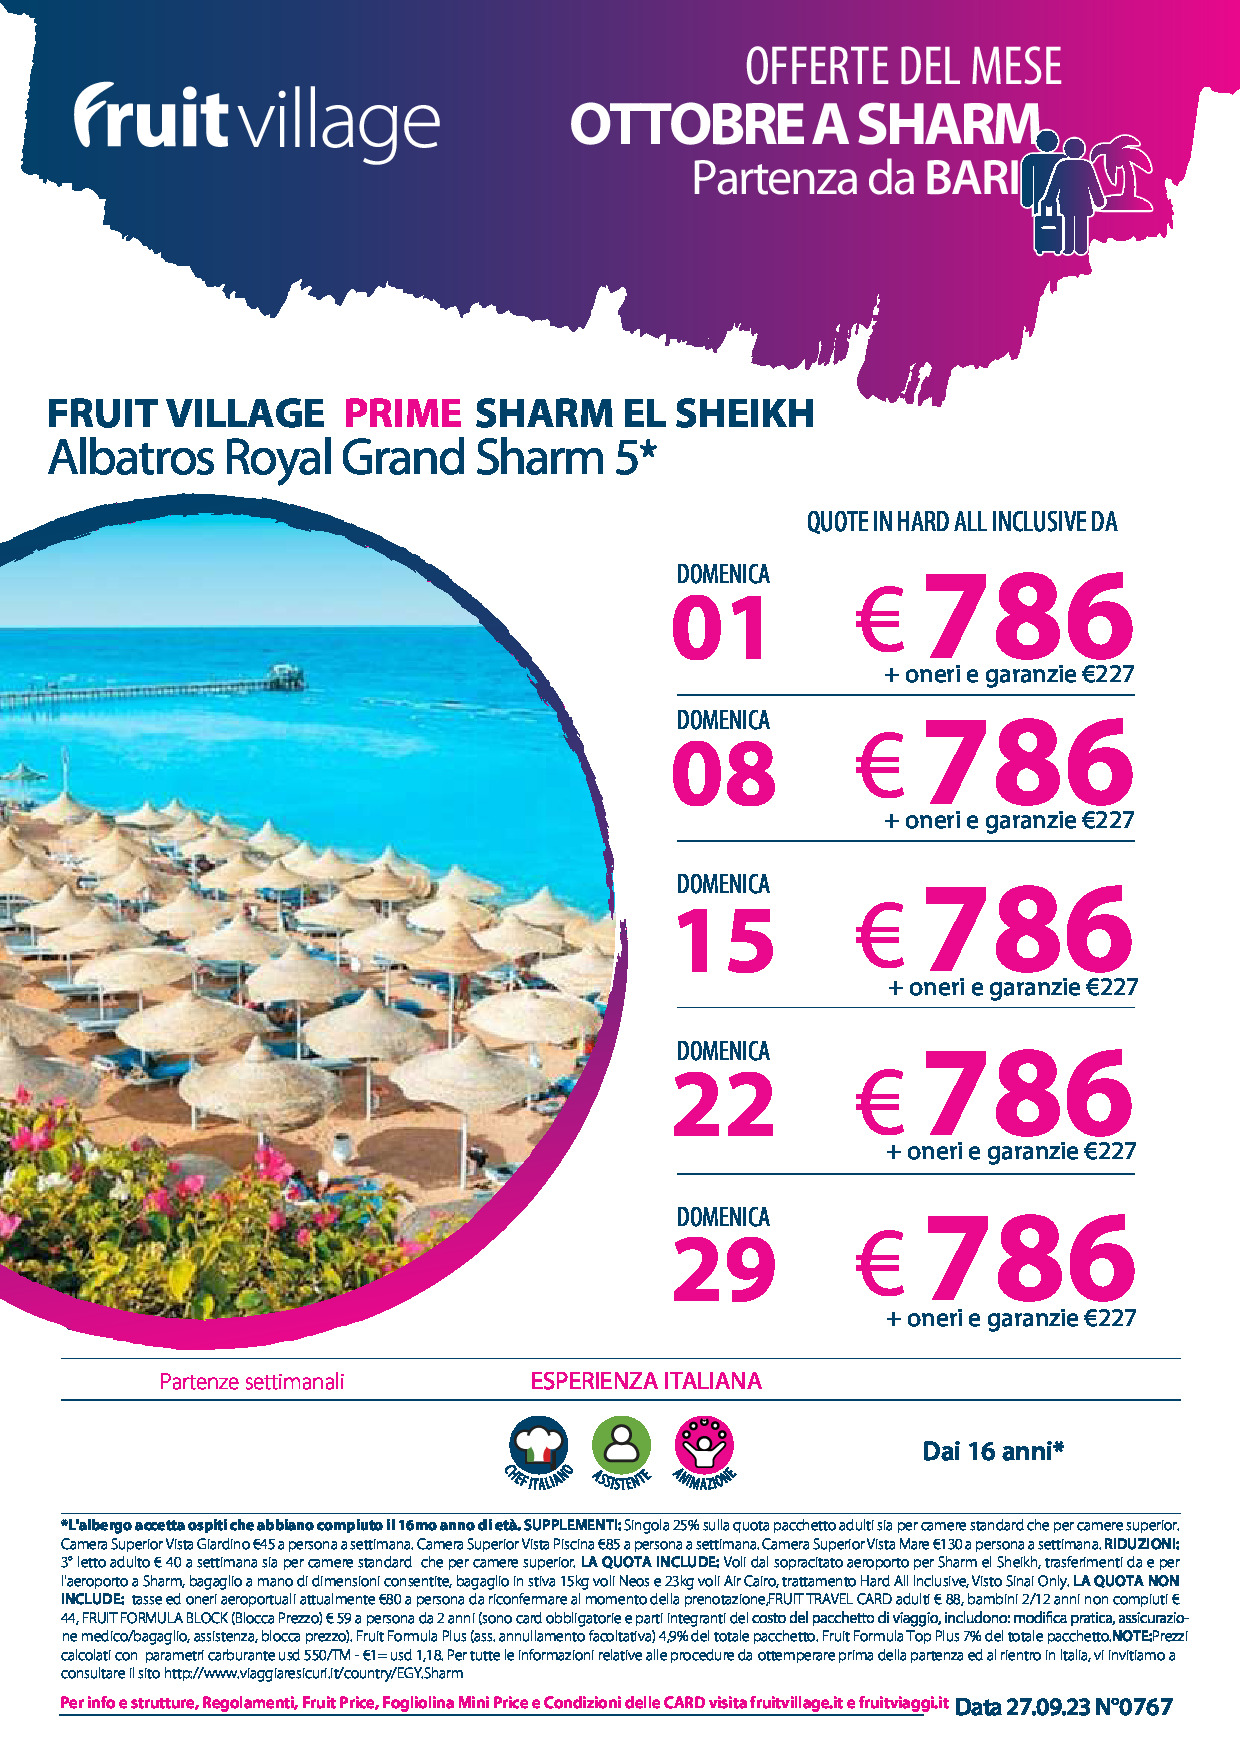 FRUIT VILLAGE PRIME Albatros Royal Grand Sharm 5* - da Bari a Ottobre